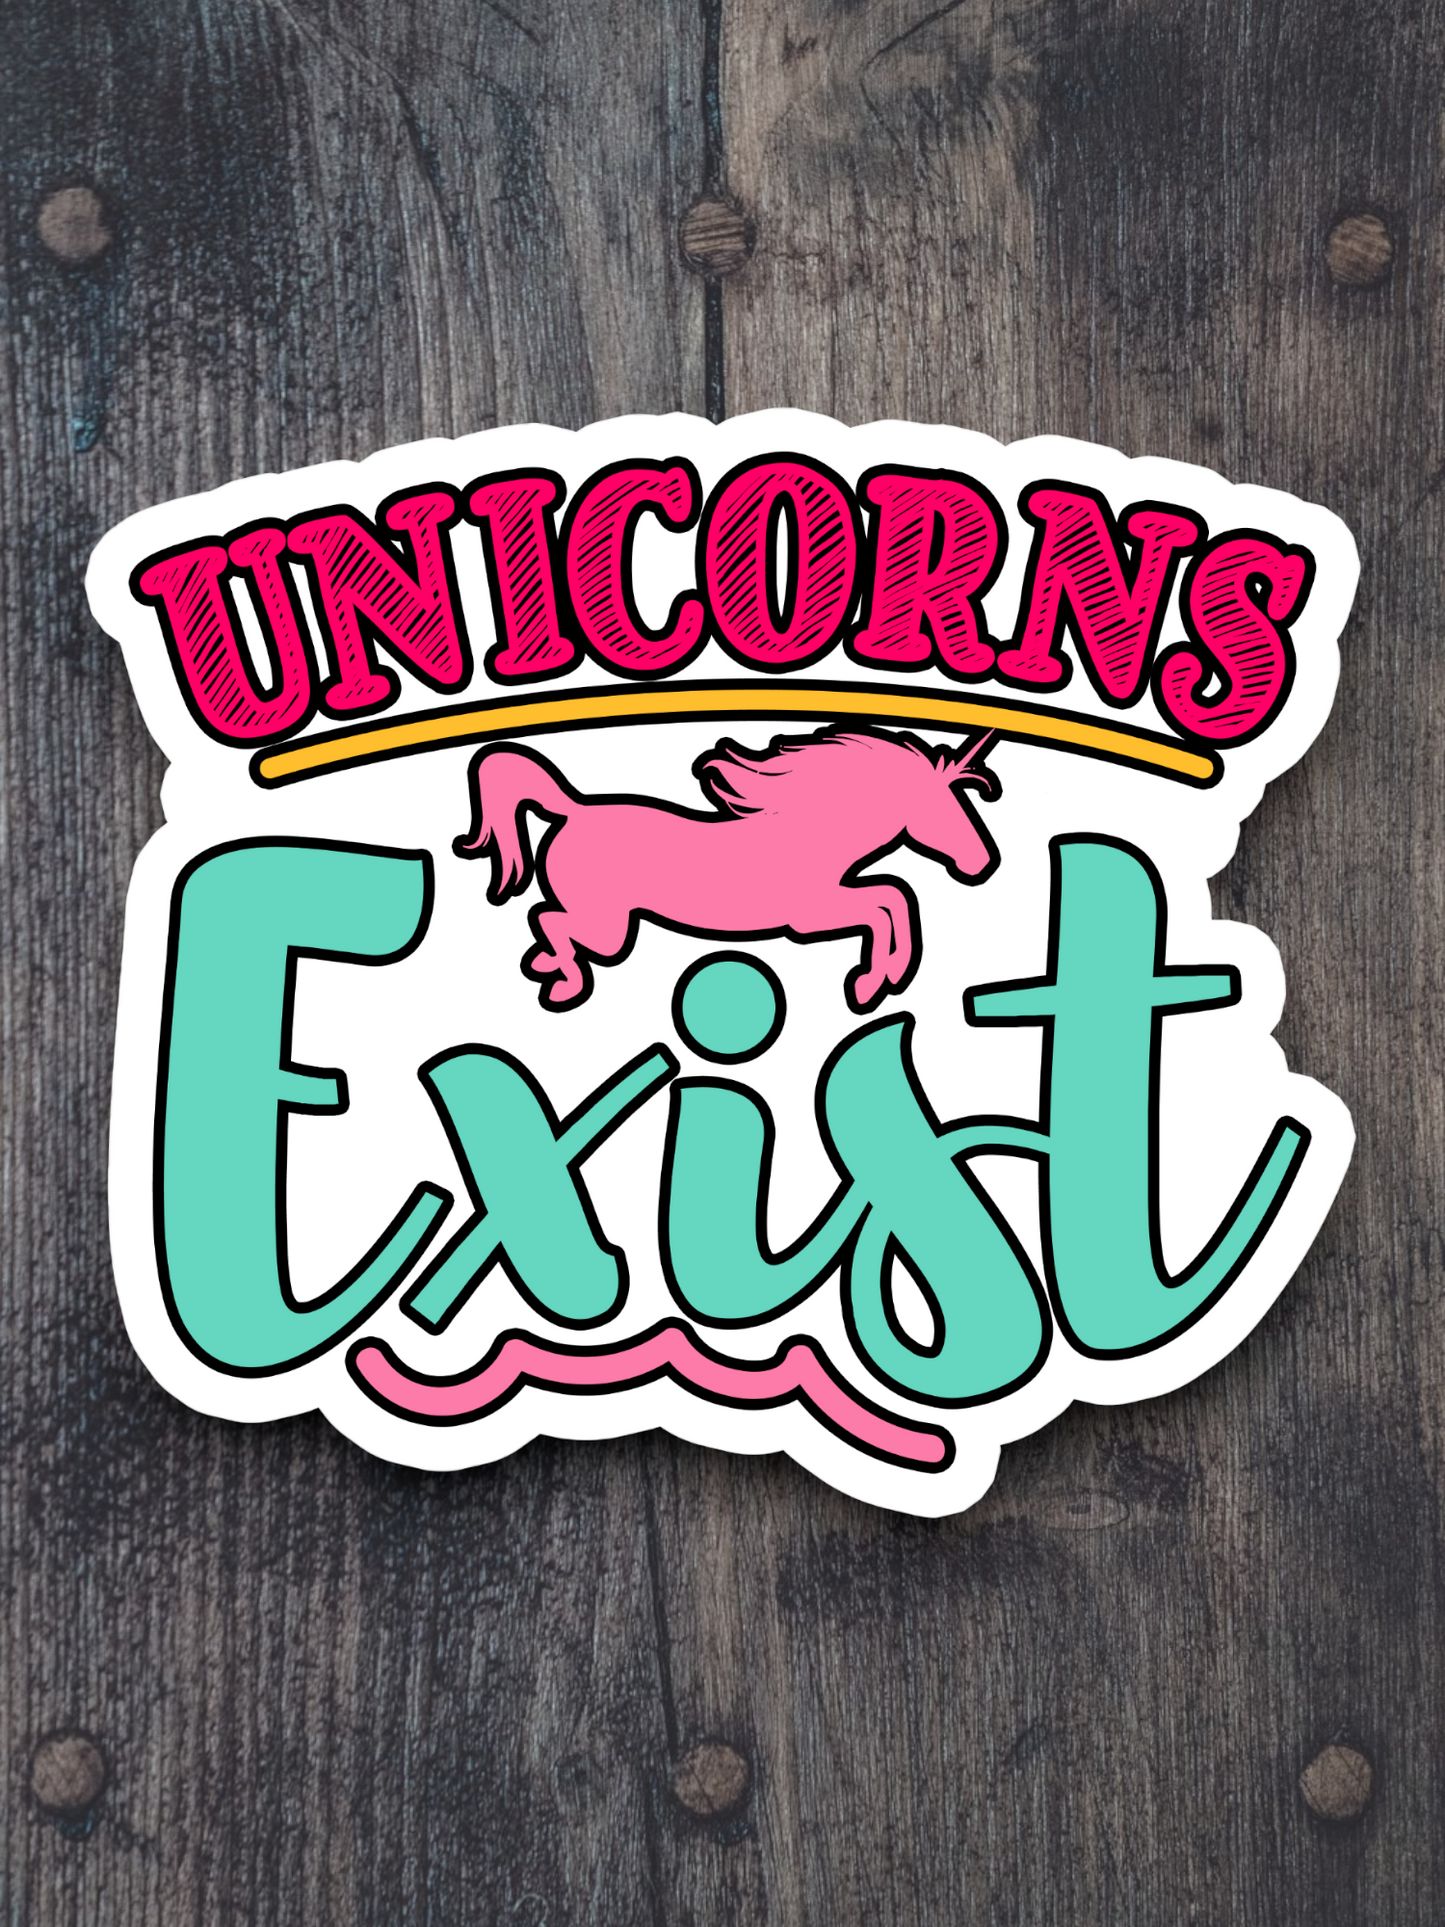 Unicorns Exist  2 Animal Sticker